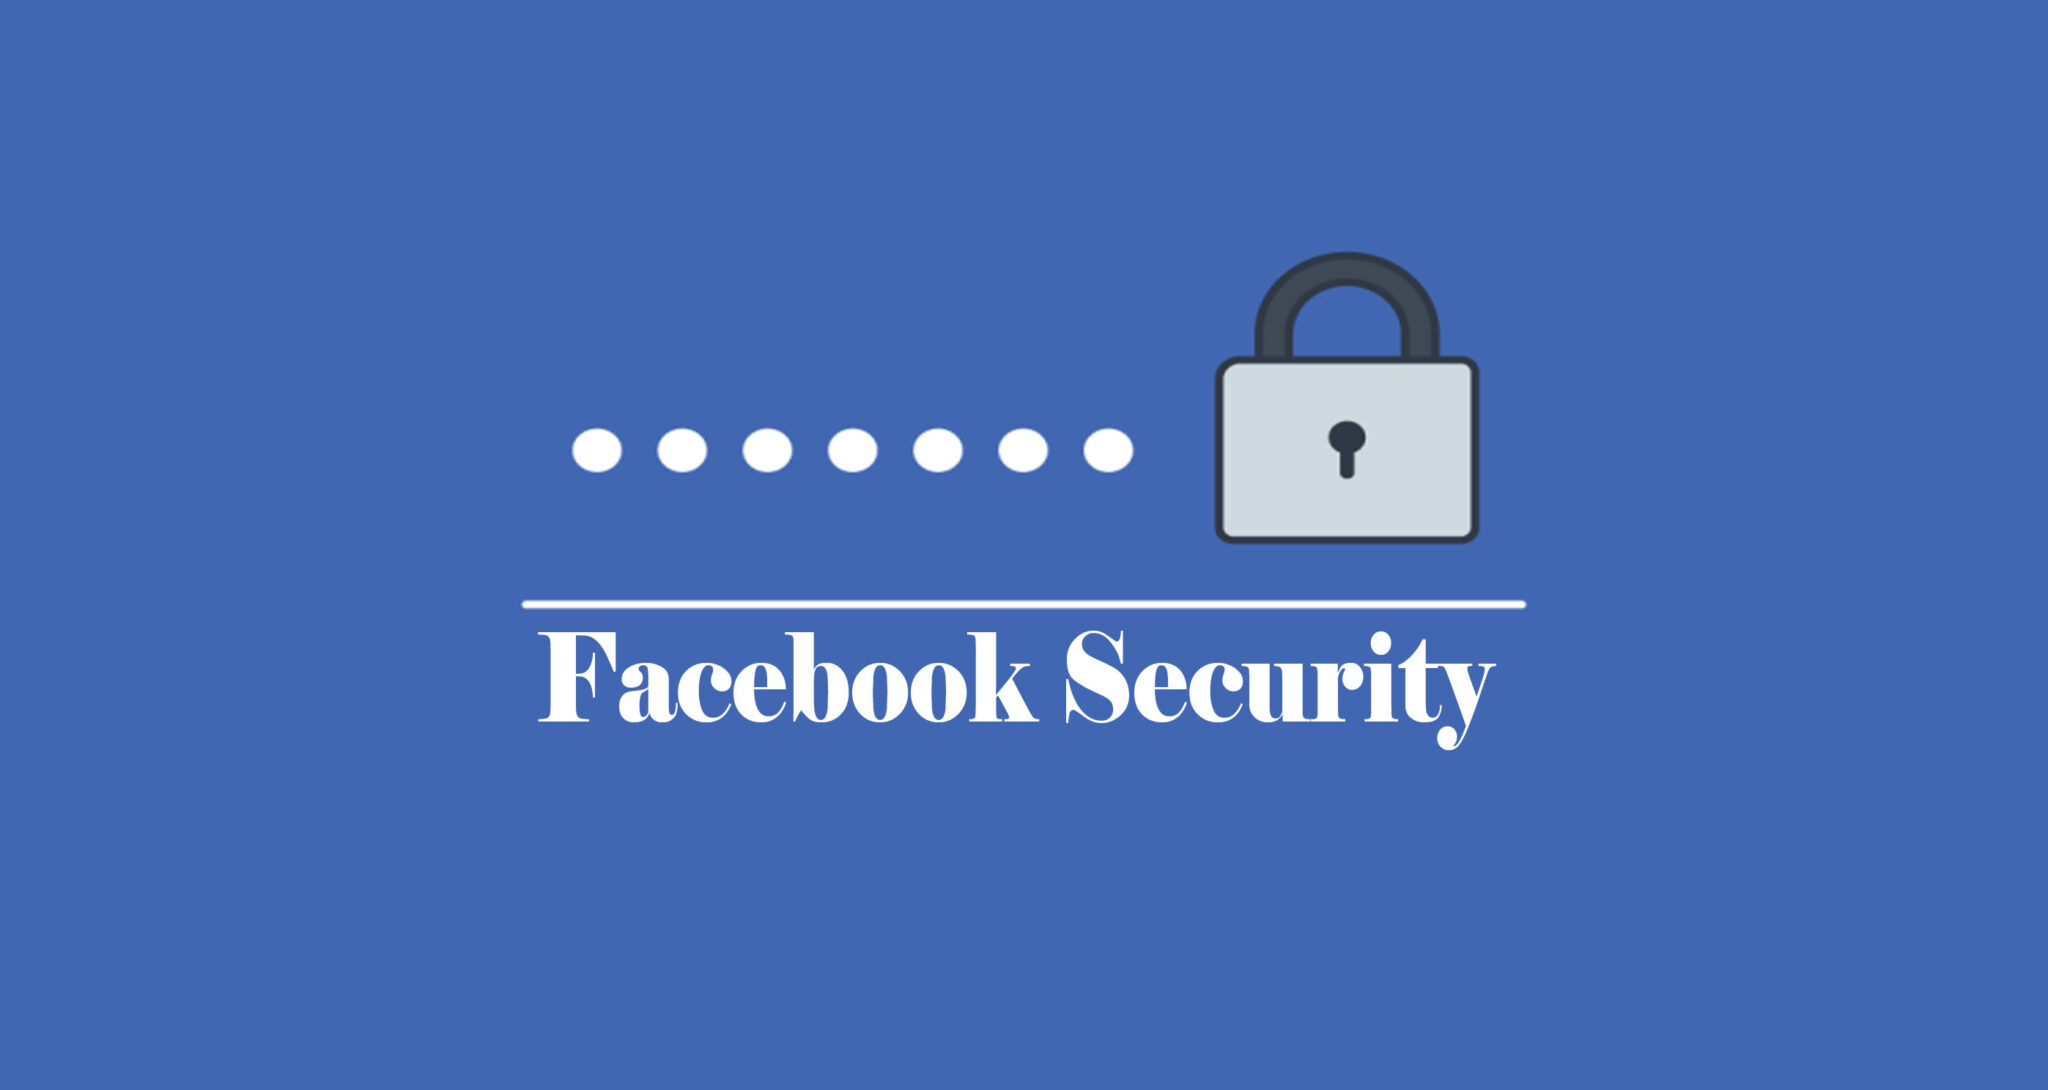 Facebook Security - Facebook Account Settings